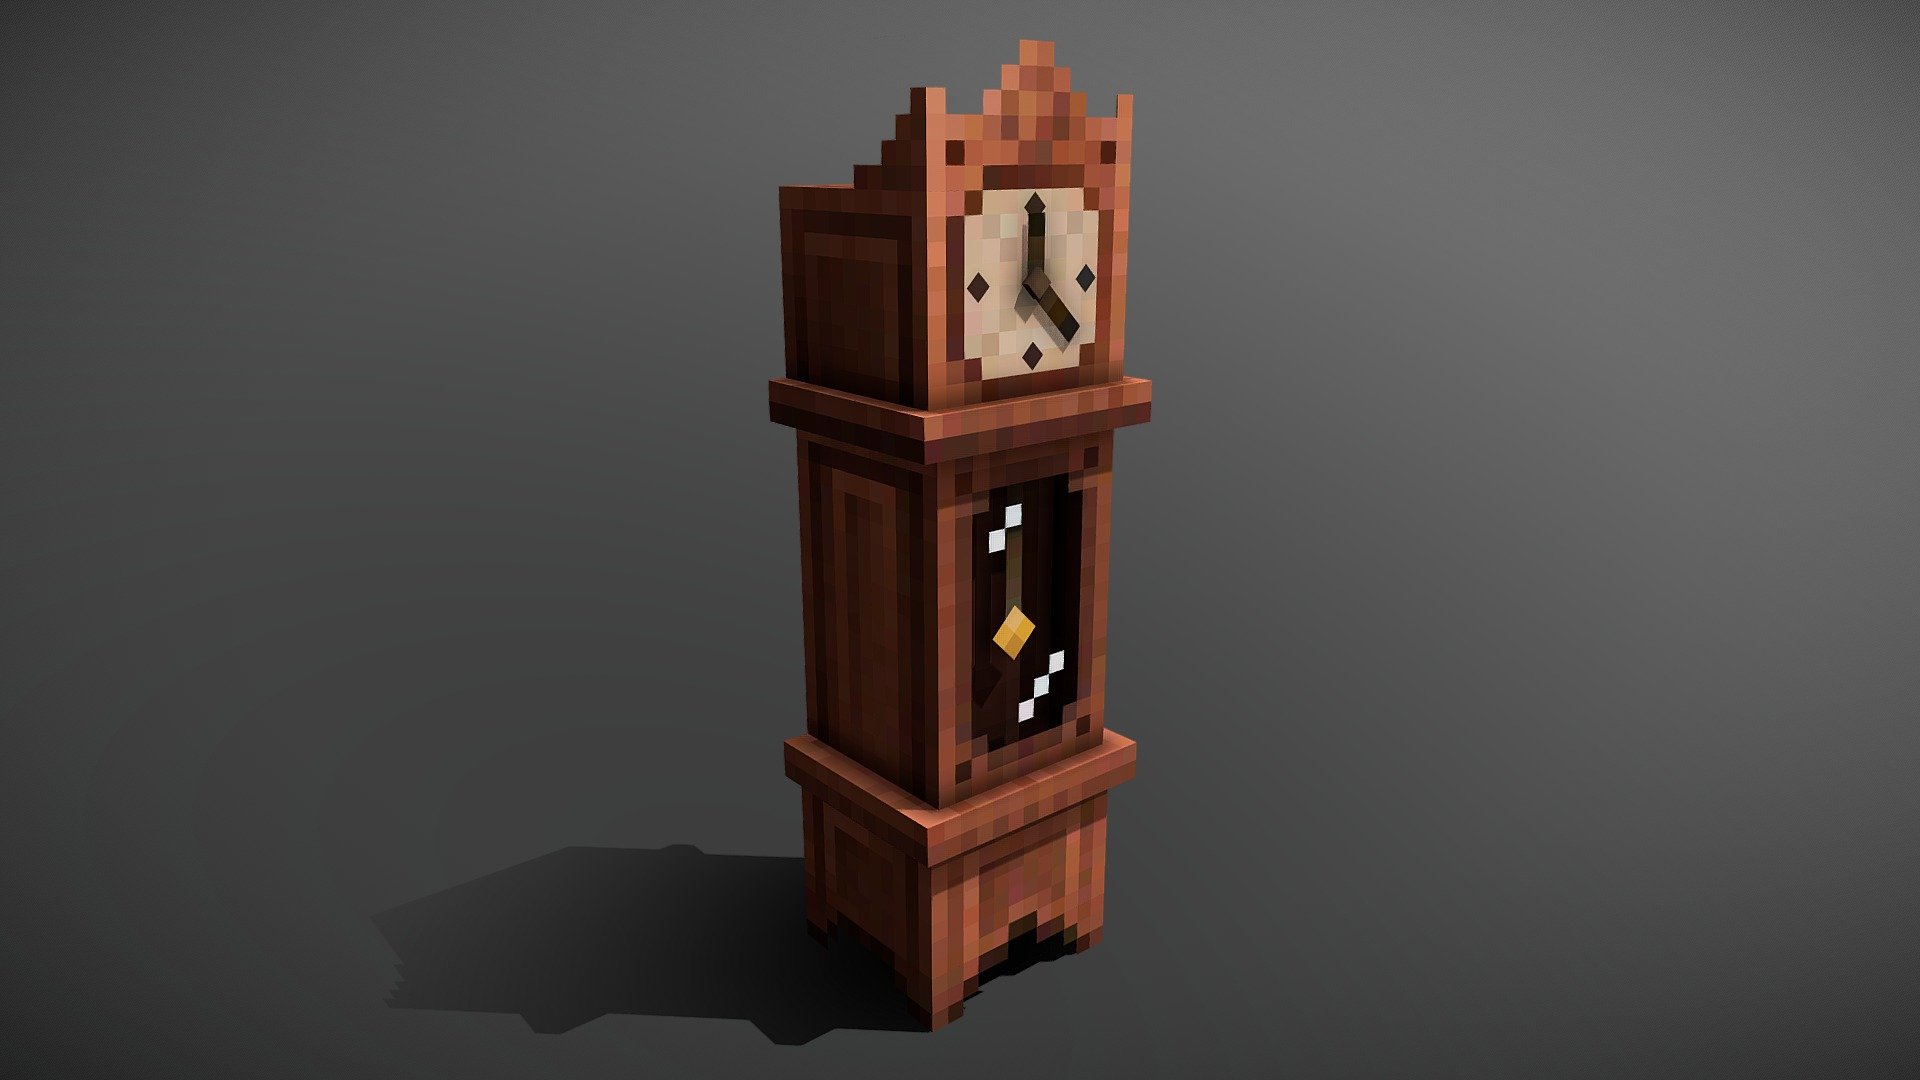 Grandfather Clock Enderman Farm : r/Minecraftbuilds